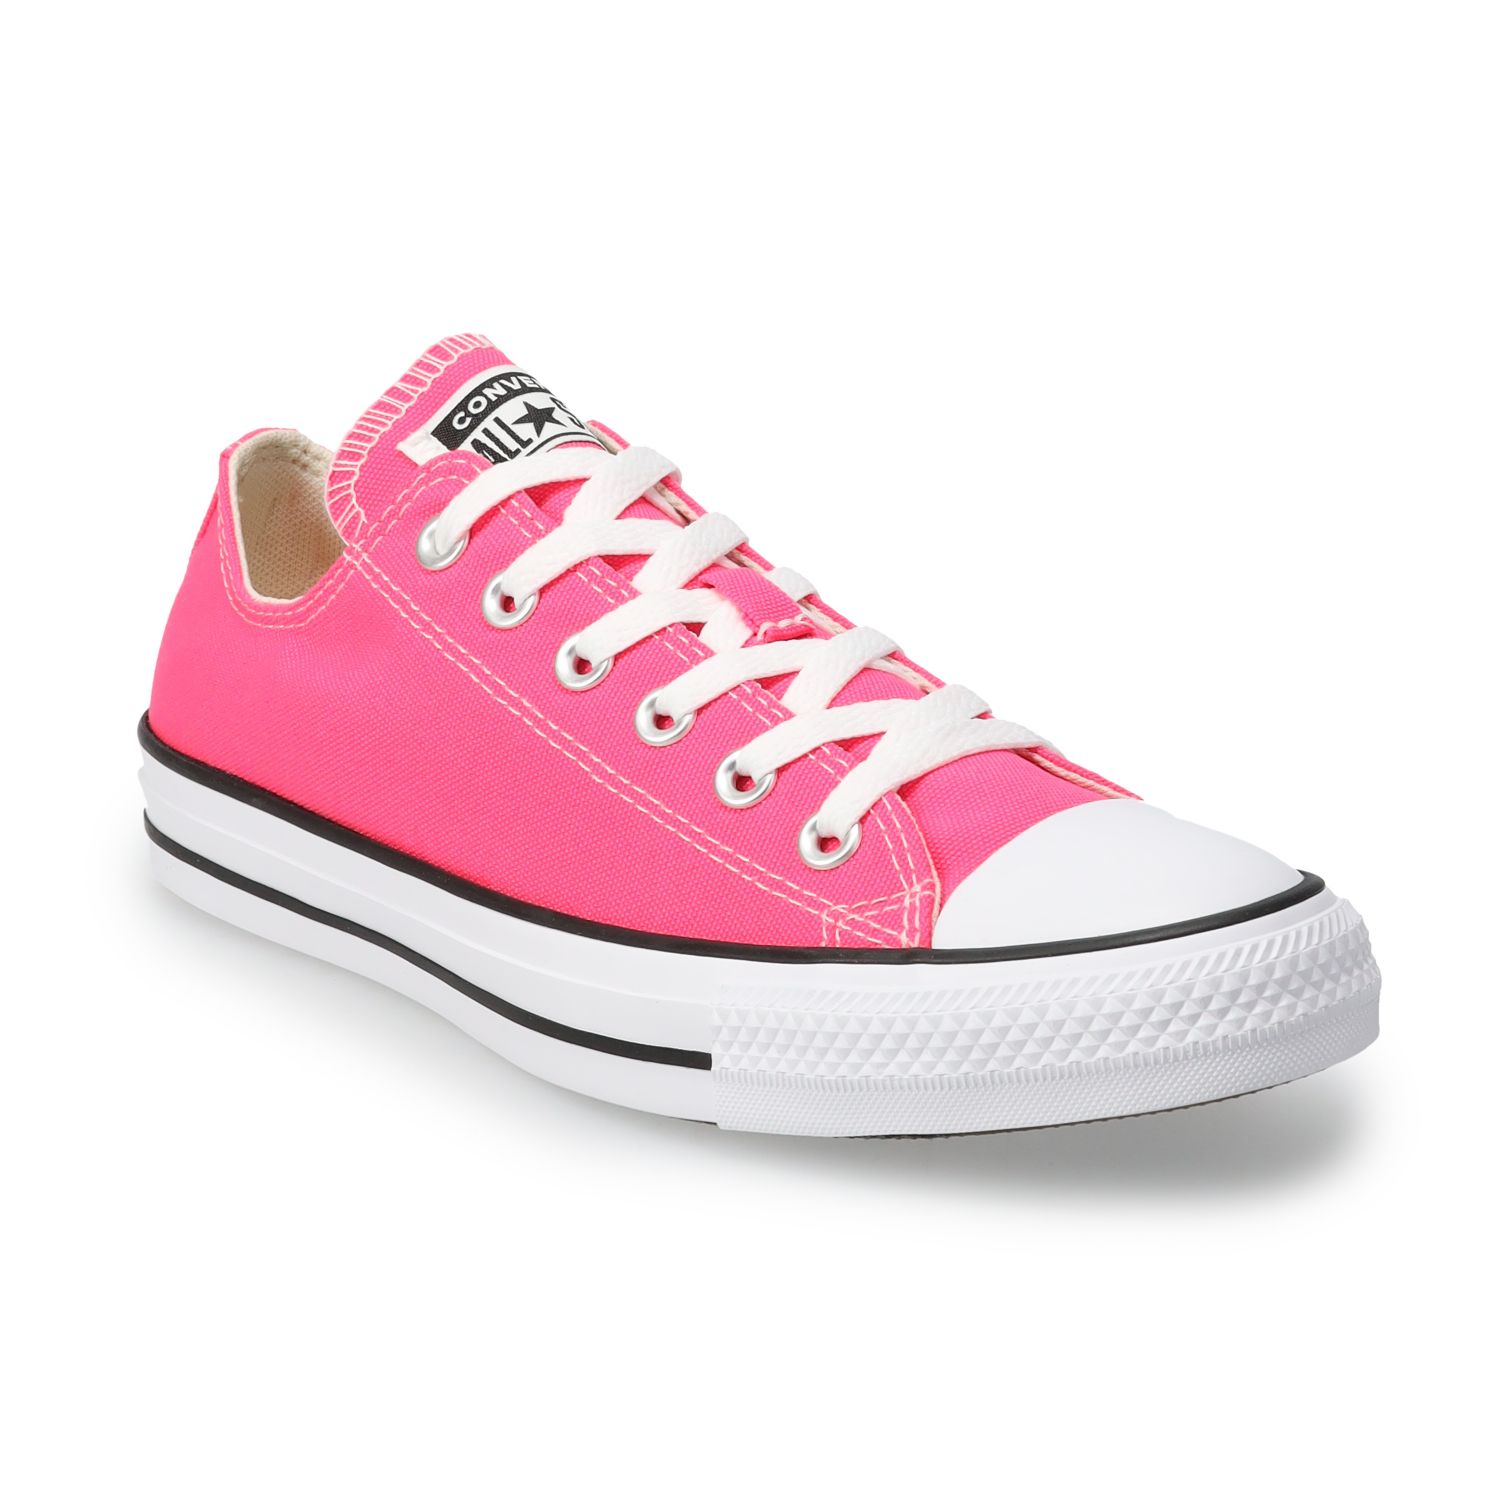 pink converse womens size 5